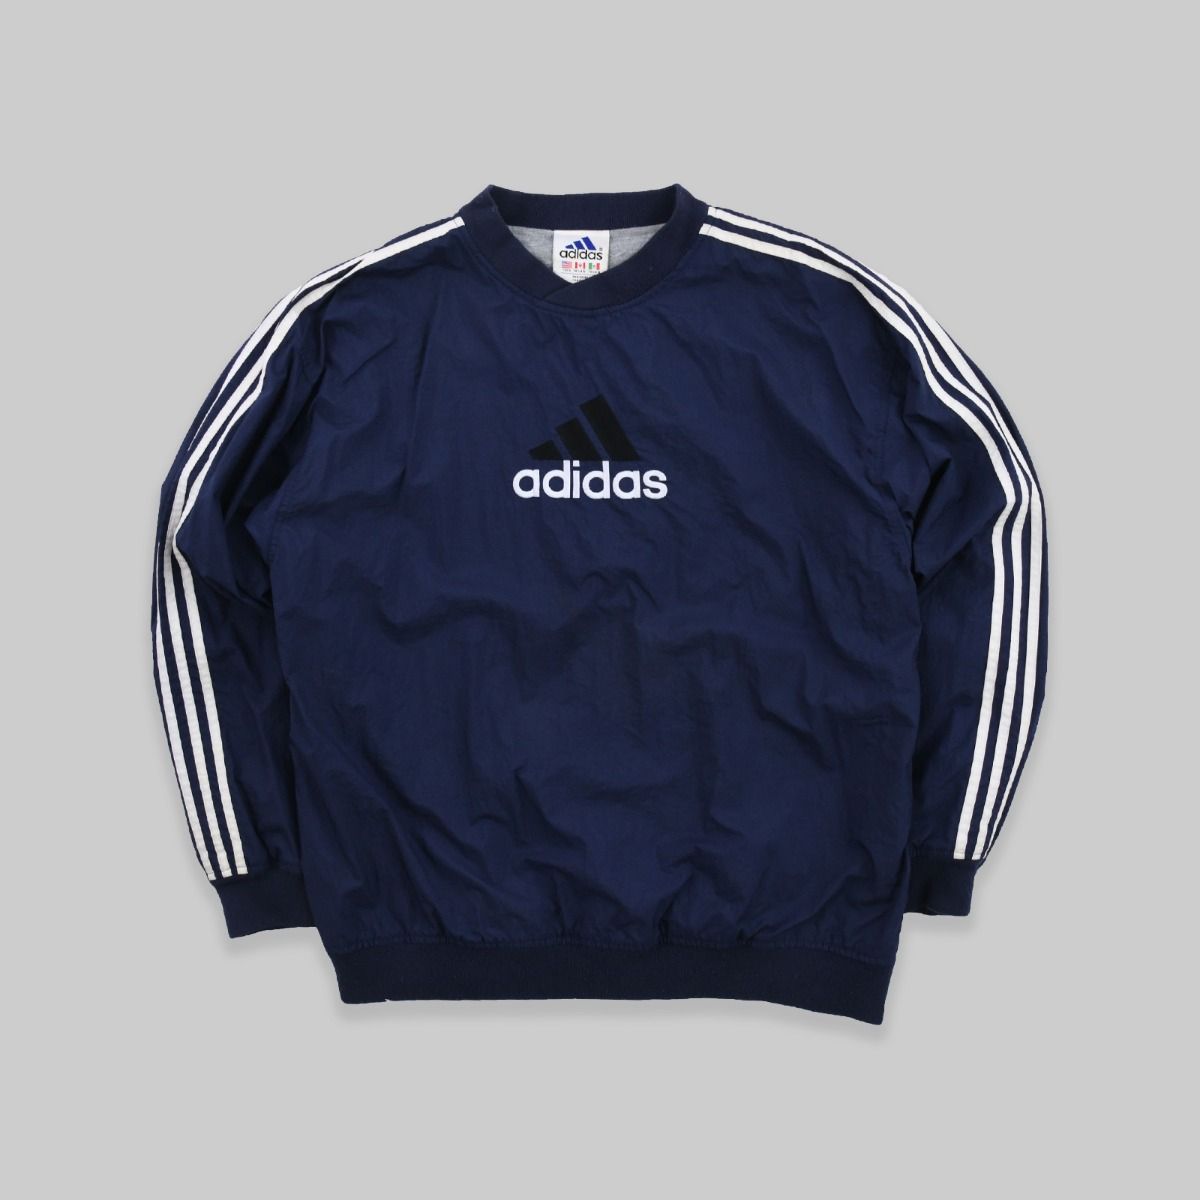 Adidas 1990s Shell Crewneck Pullover